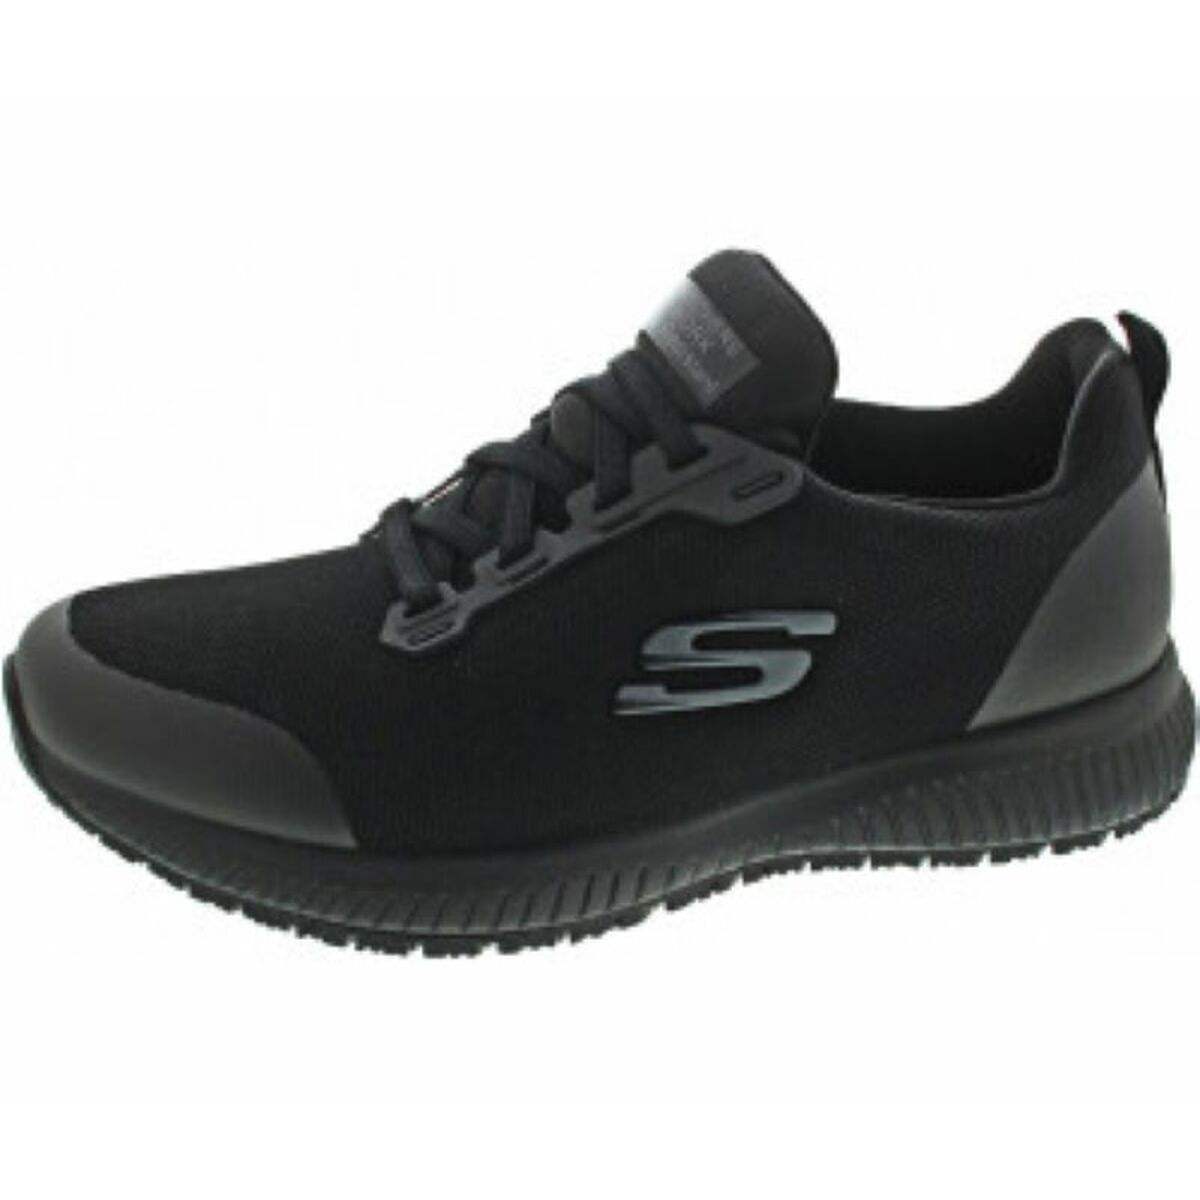 Chaussures de sport pour femme Skechers SQUAD 77222EC BKRG Noir - Skechers - Jardin D'Eyden - jardindeyden.fr